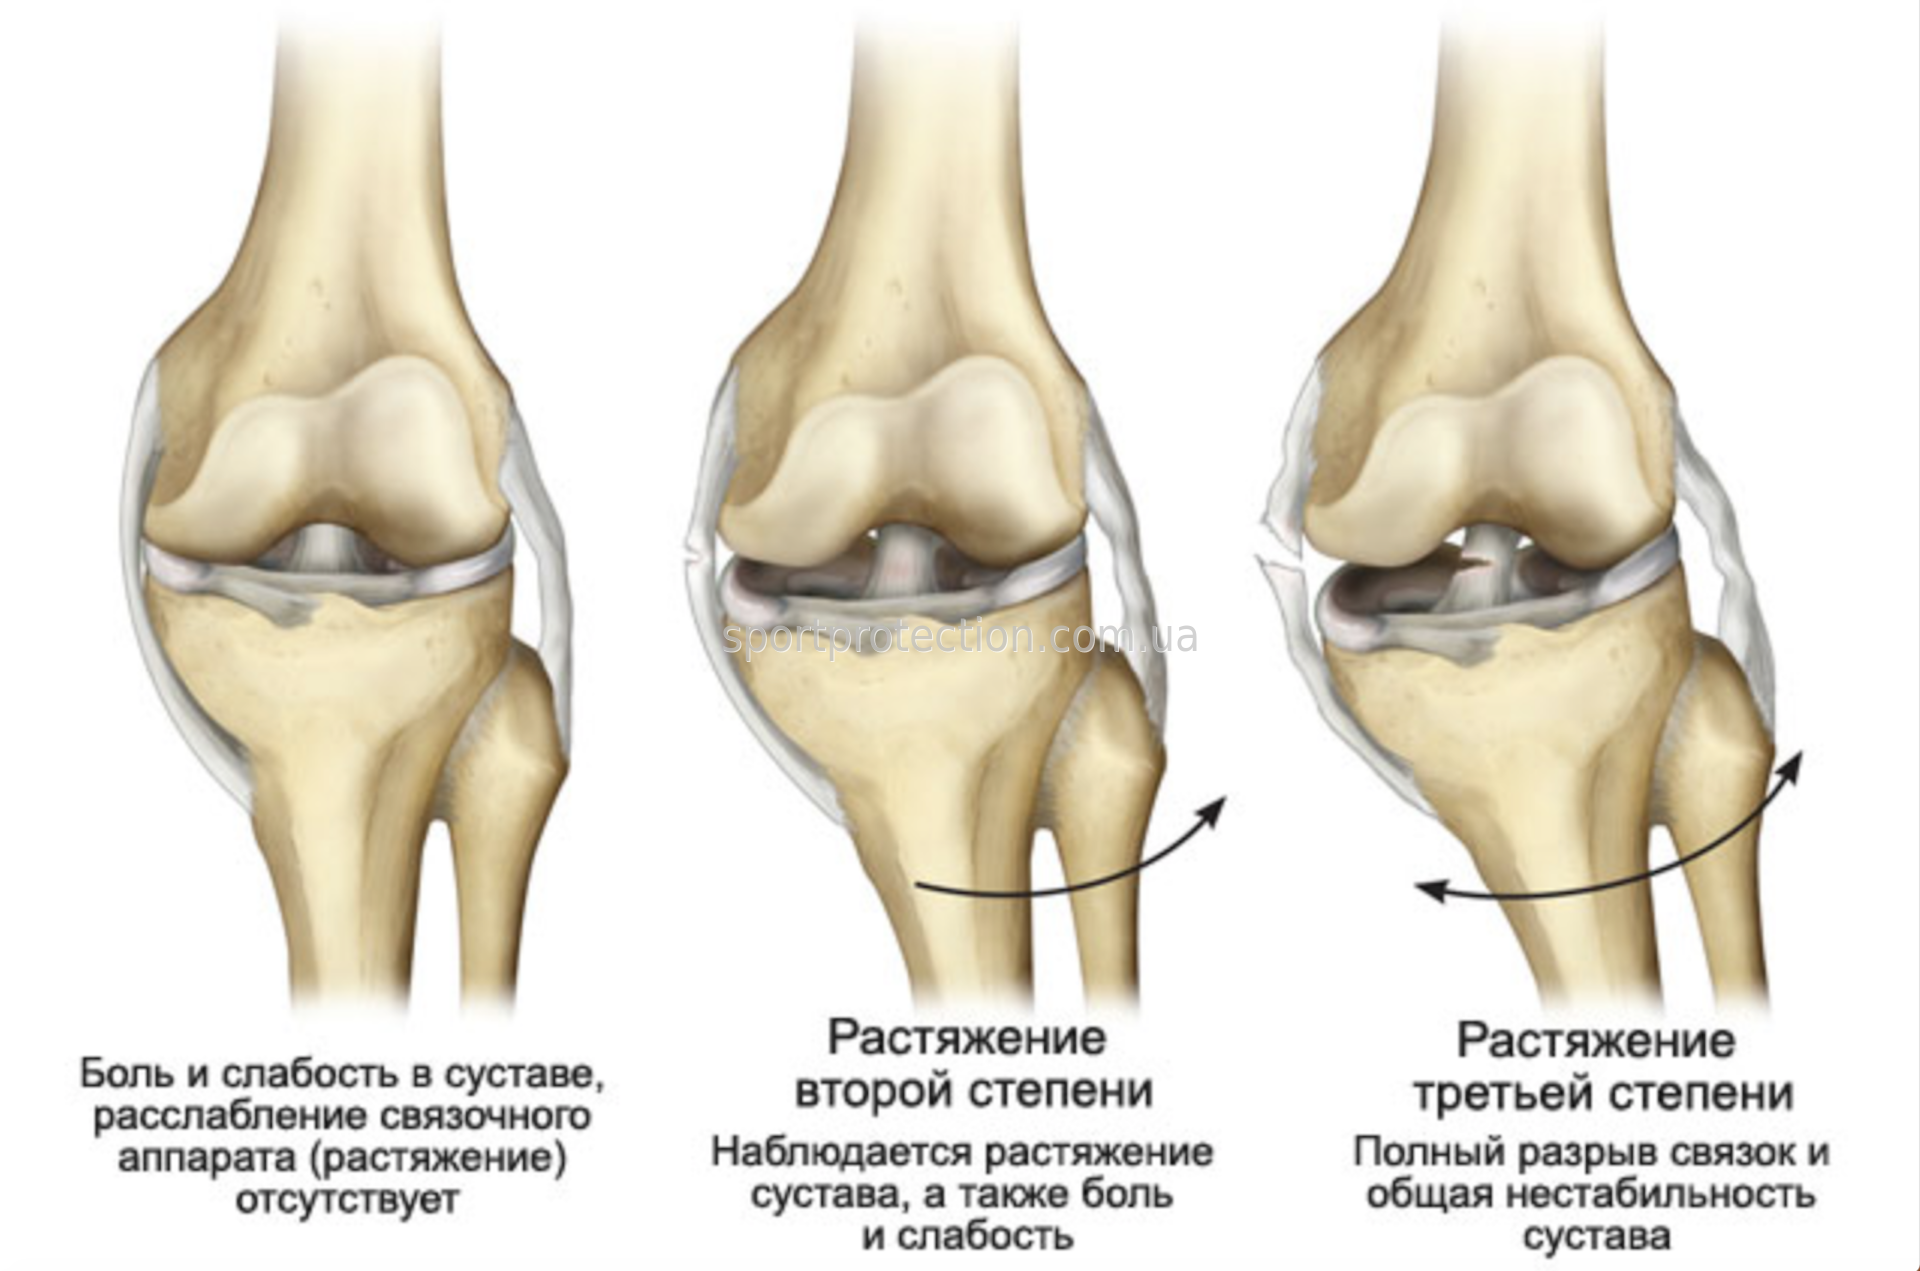 Ушиб повреждение связок колена. Диагностика повреждений боковых связок коленного сустава. Степени повреждения коленного сустава. Степени разрыва боковой связки коленного сустава. Контузионные изменения кости